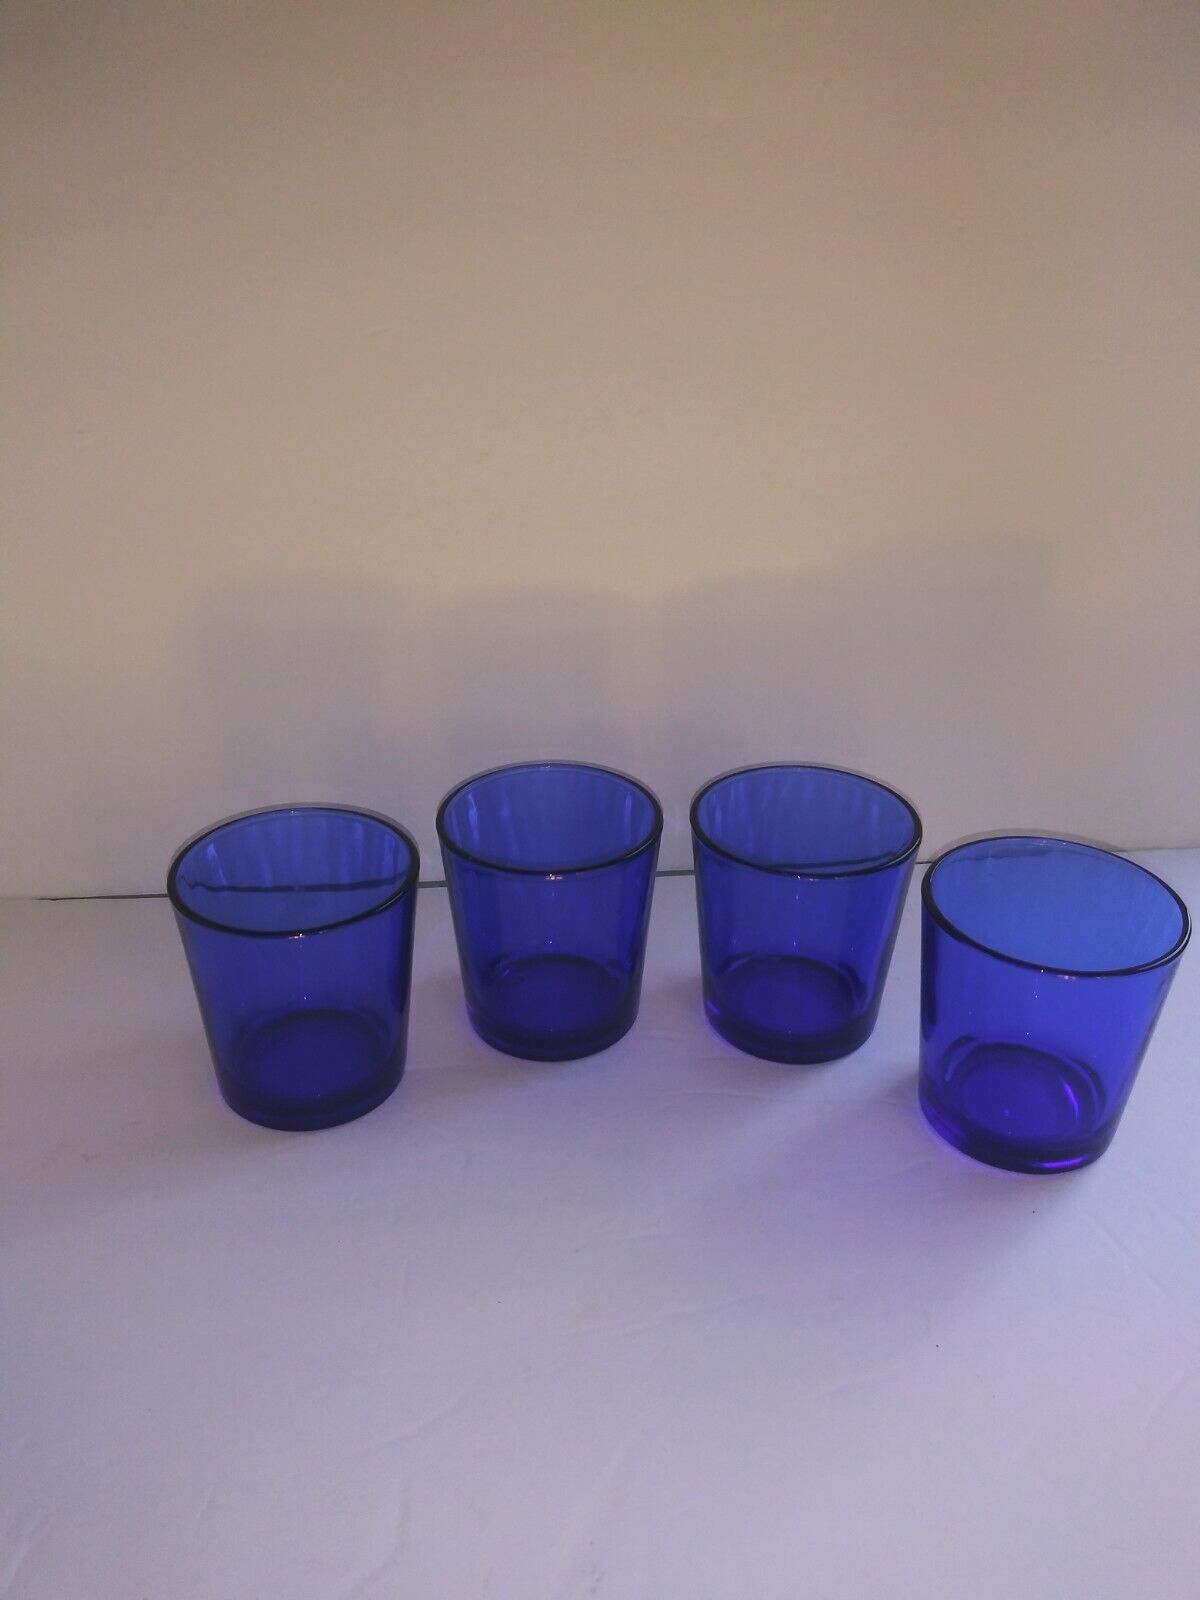 4 Libbey Cobalt Blue drinking glass tumblers -16 oz. capacity Vintage Summer